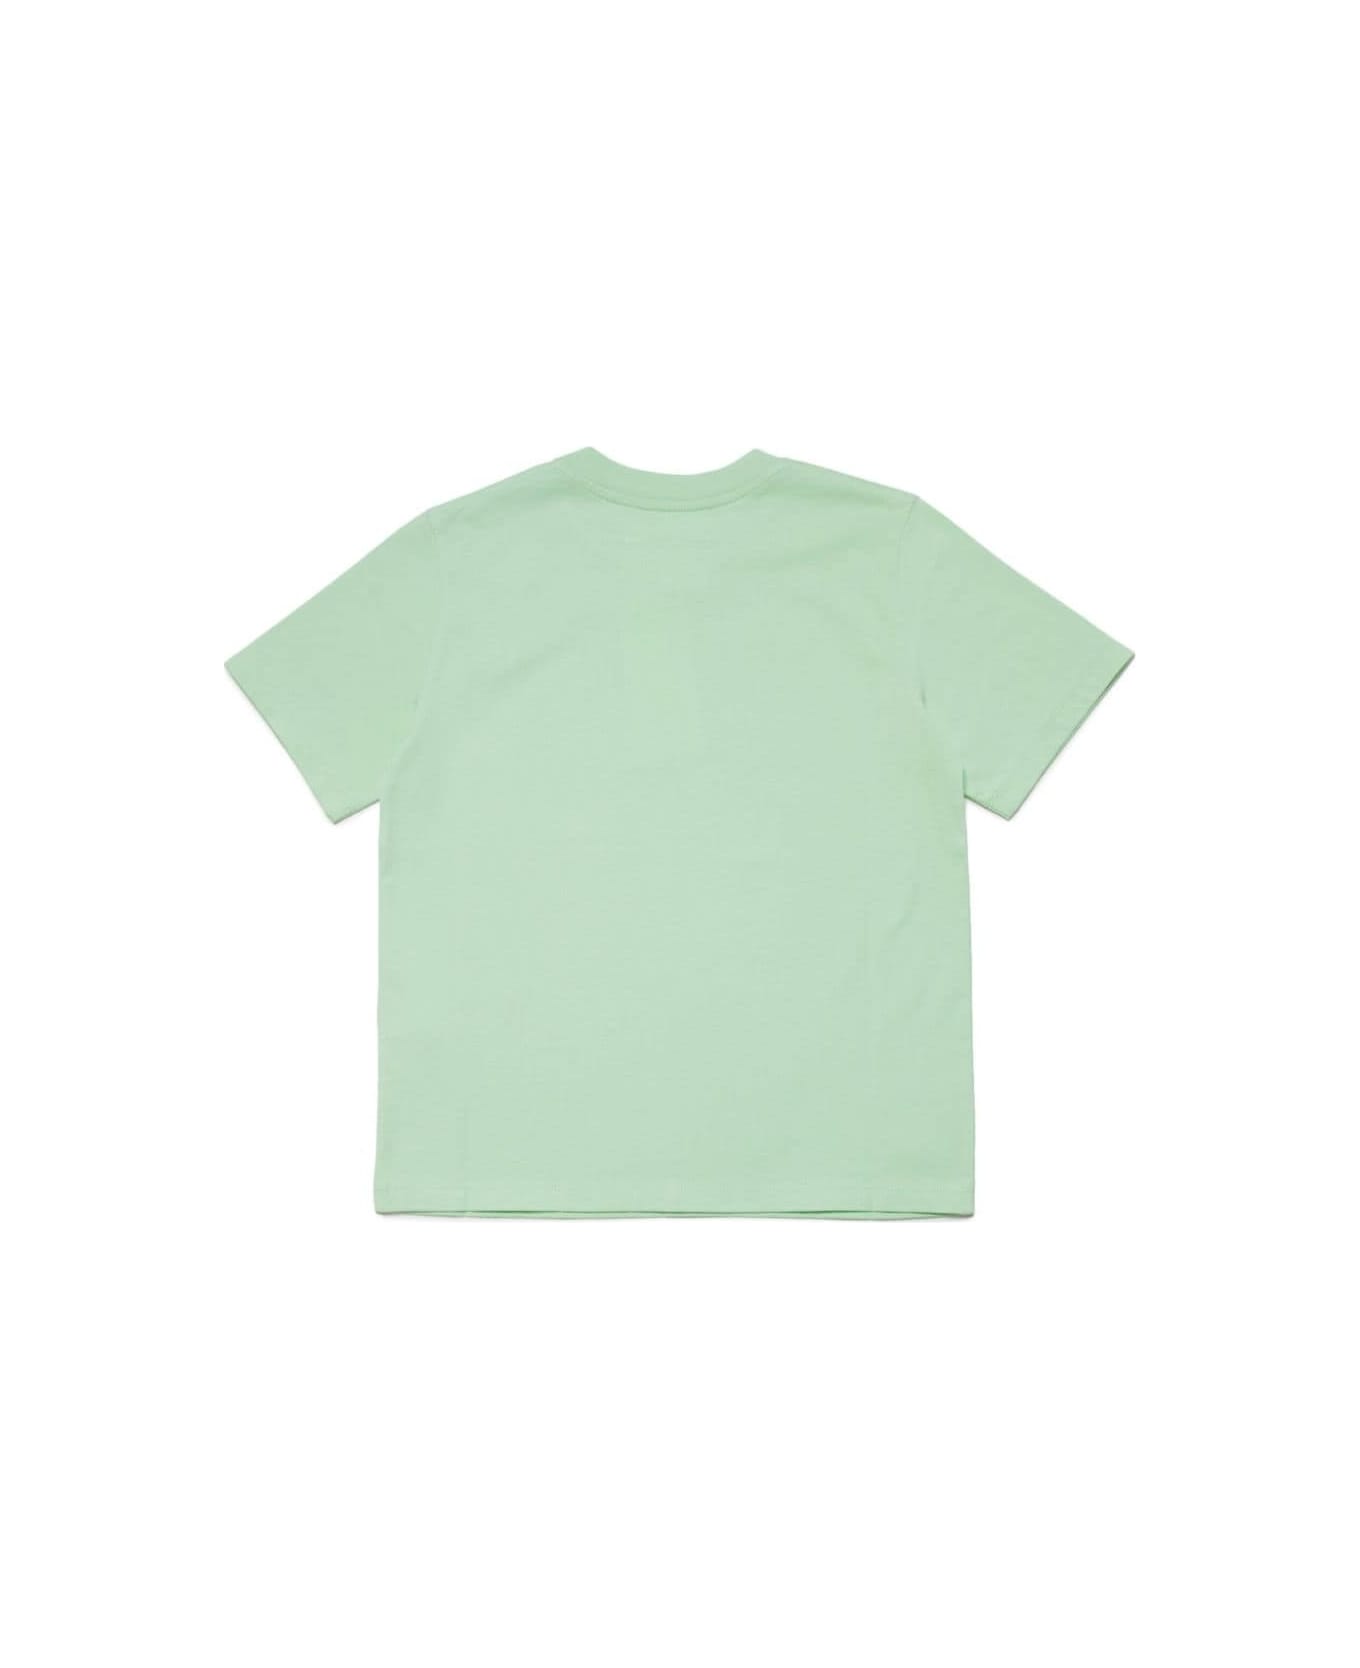 MM6 Maison Margiela T-shirt Con Logo - Green